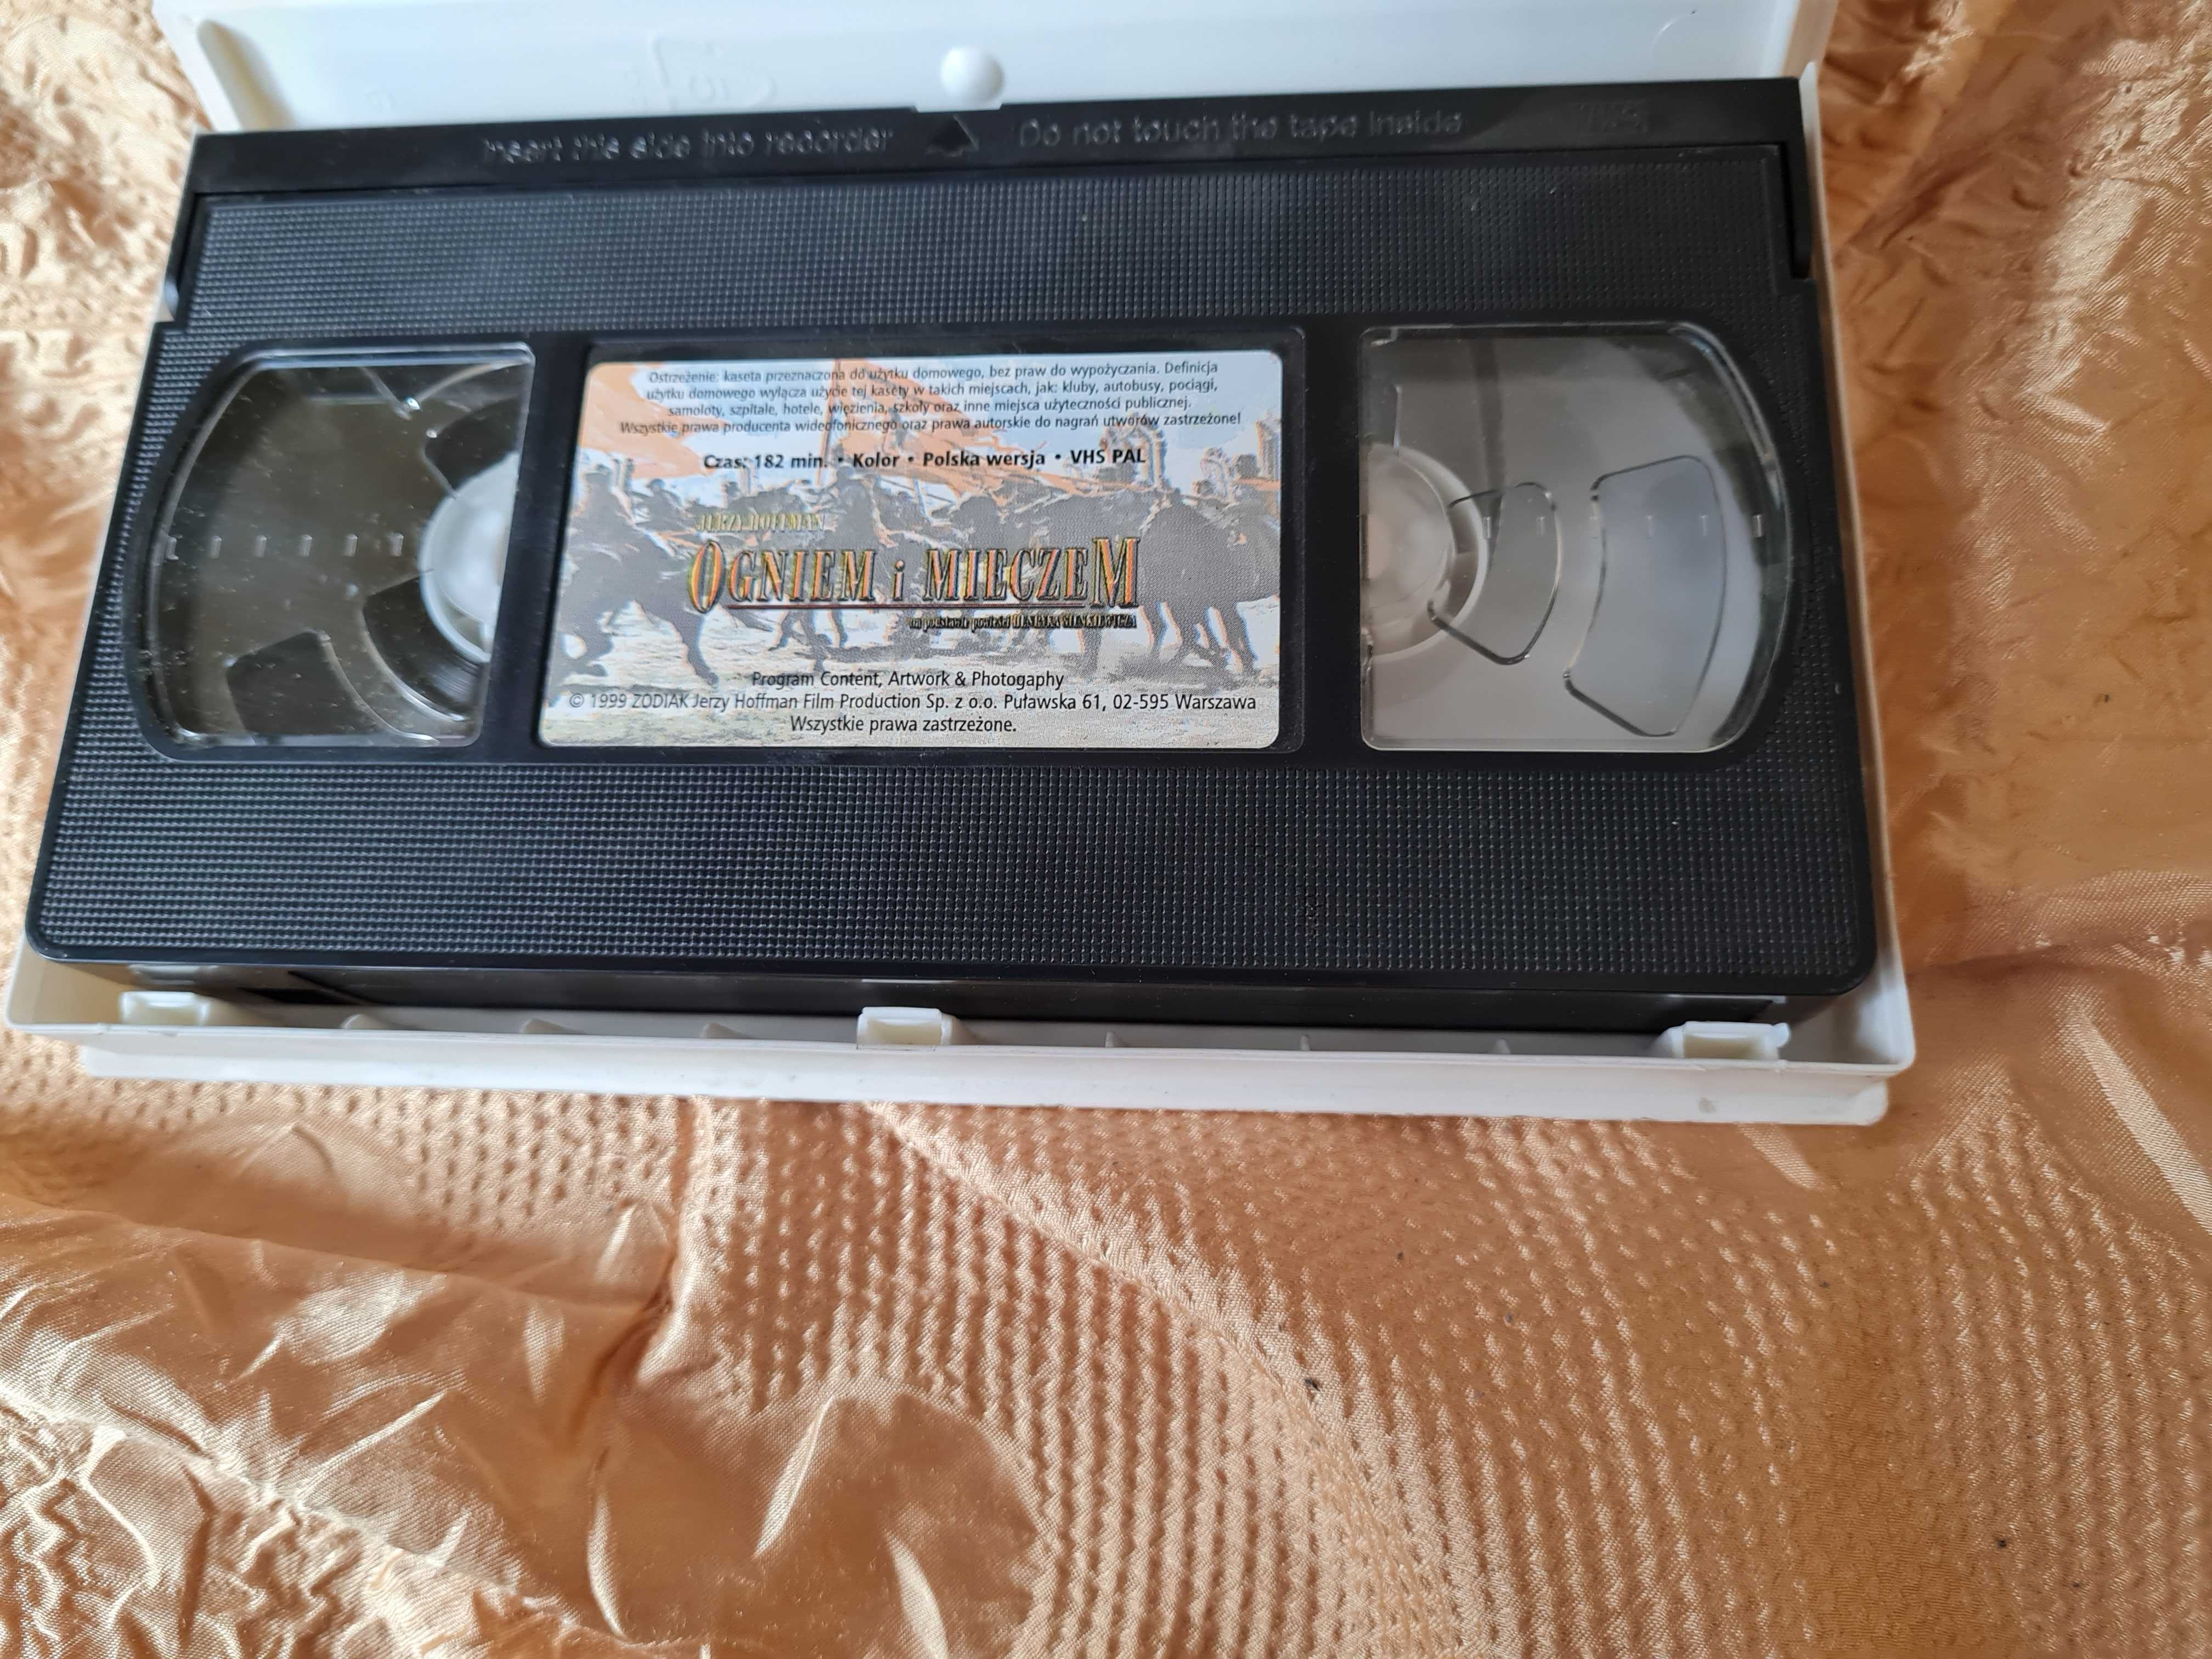 Ogniem i mieczem kaseta VHS